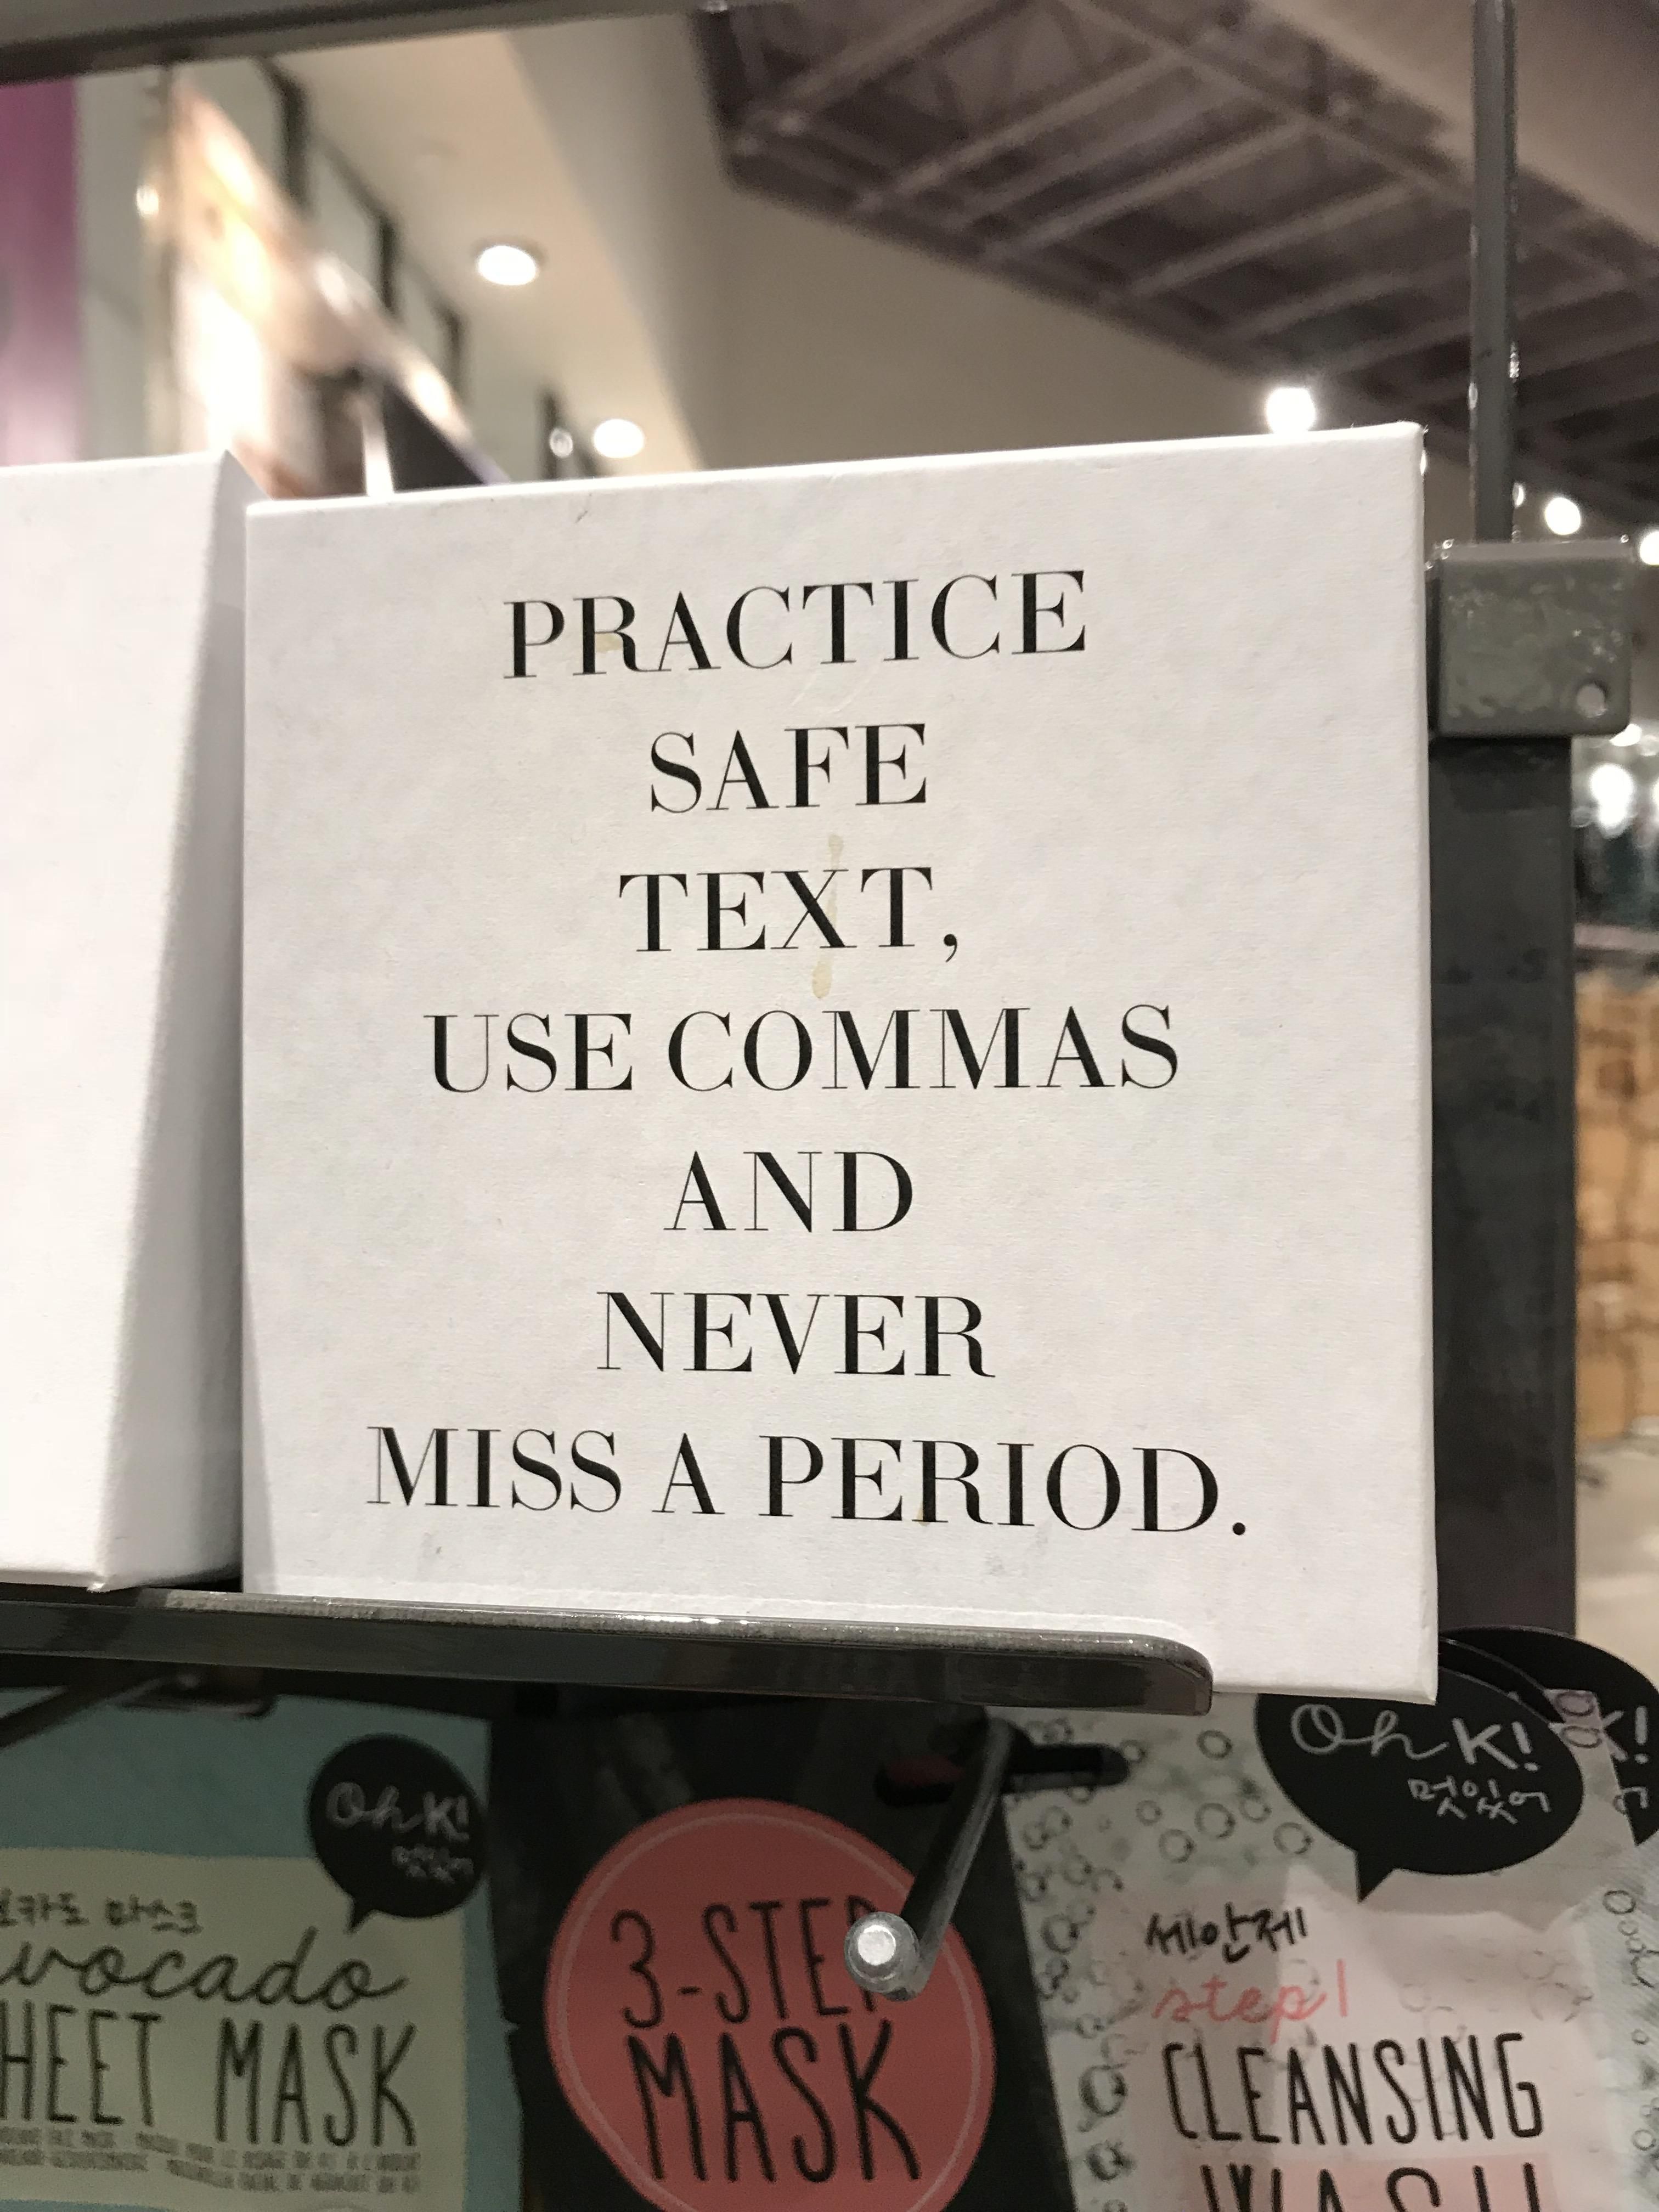 Always practice safe text.